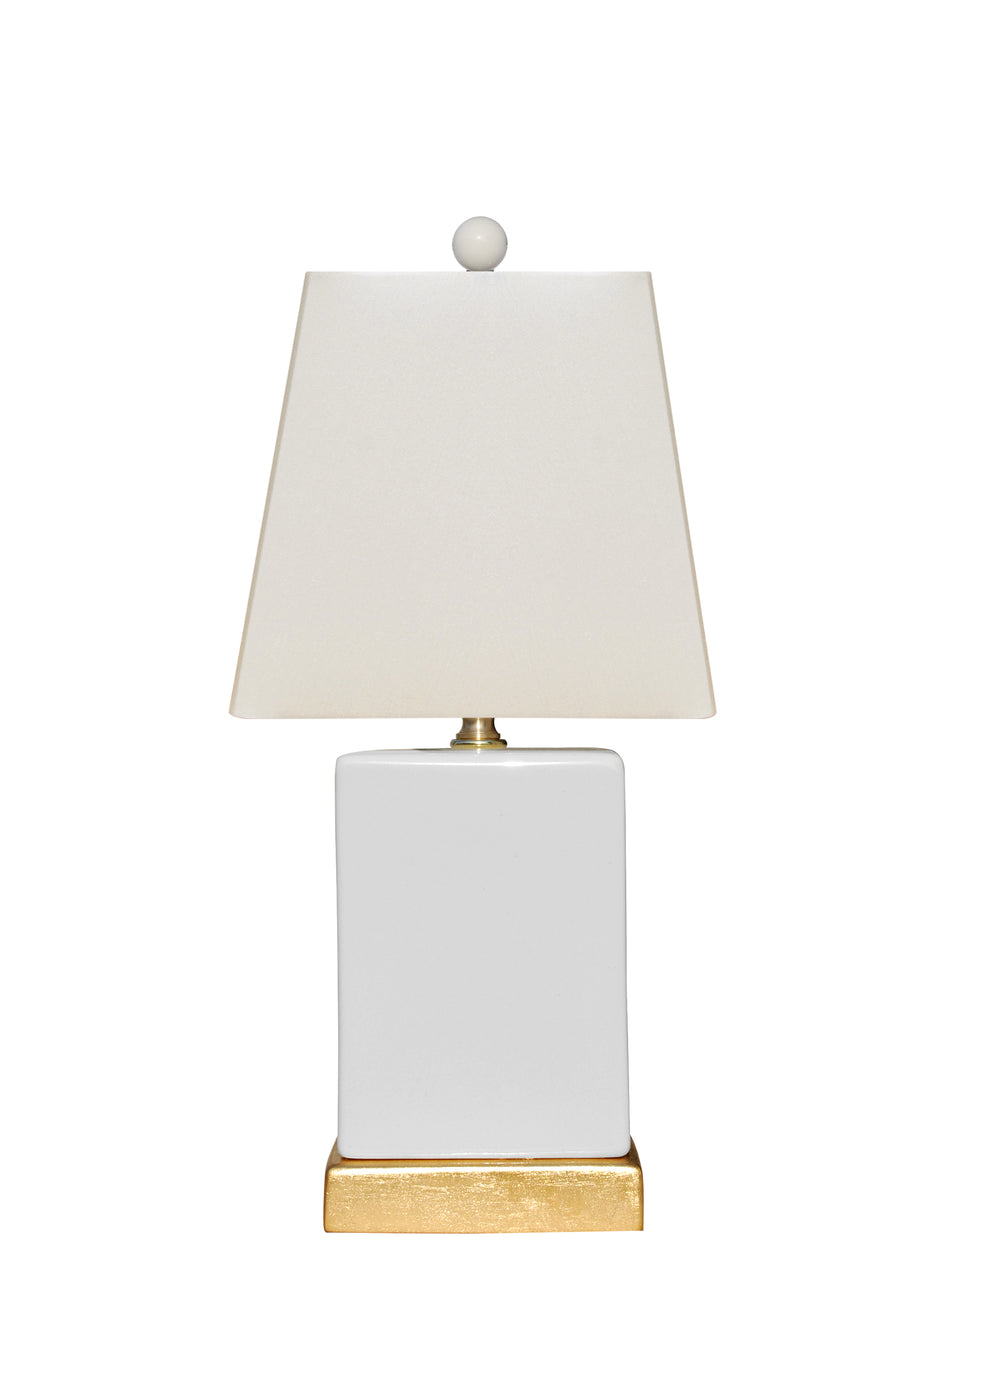 Rectangular White Porcelain Table Lamp with Gold Leaf Base